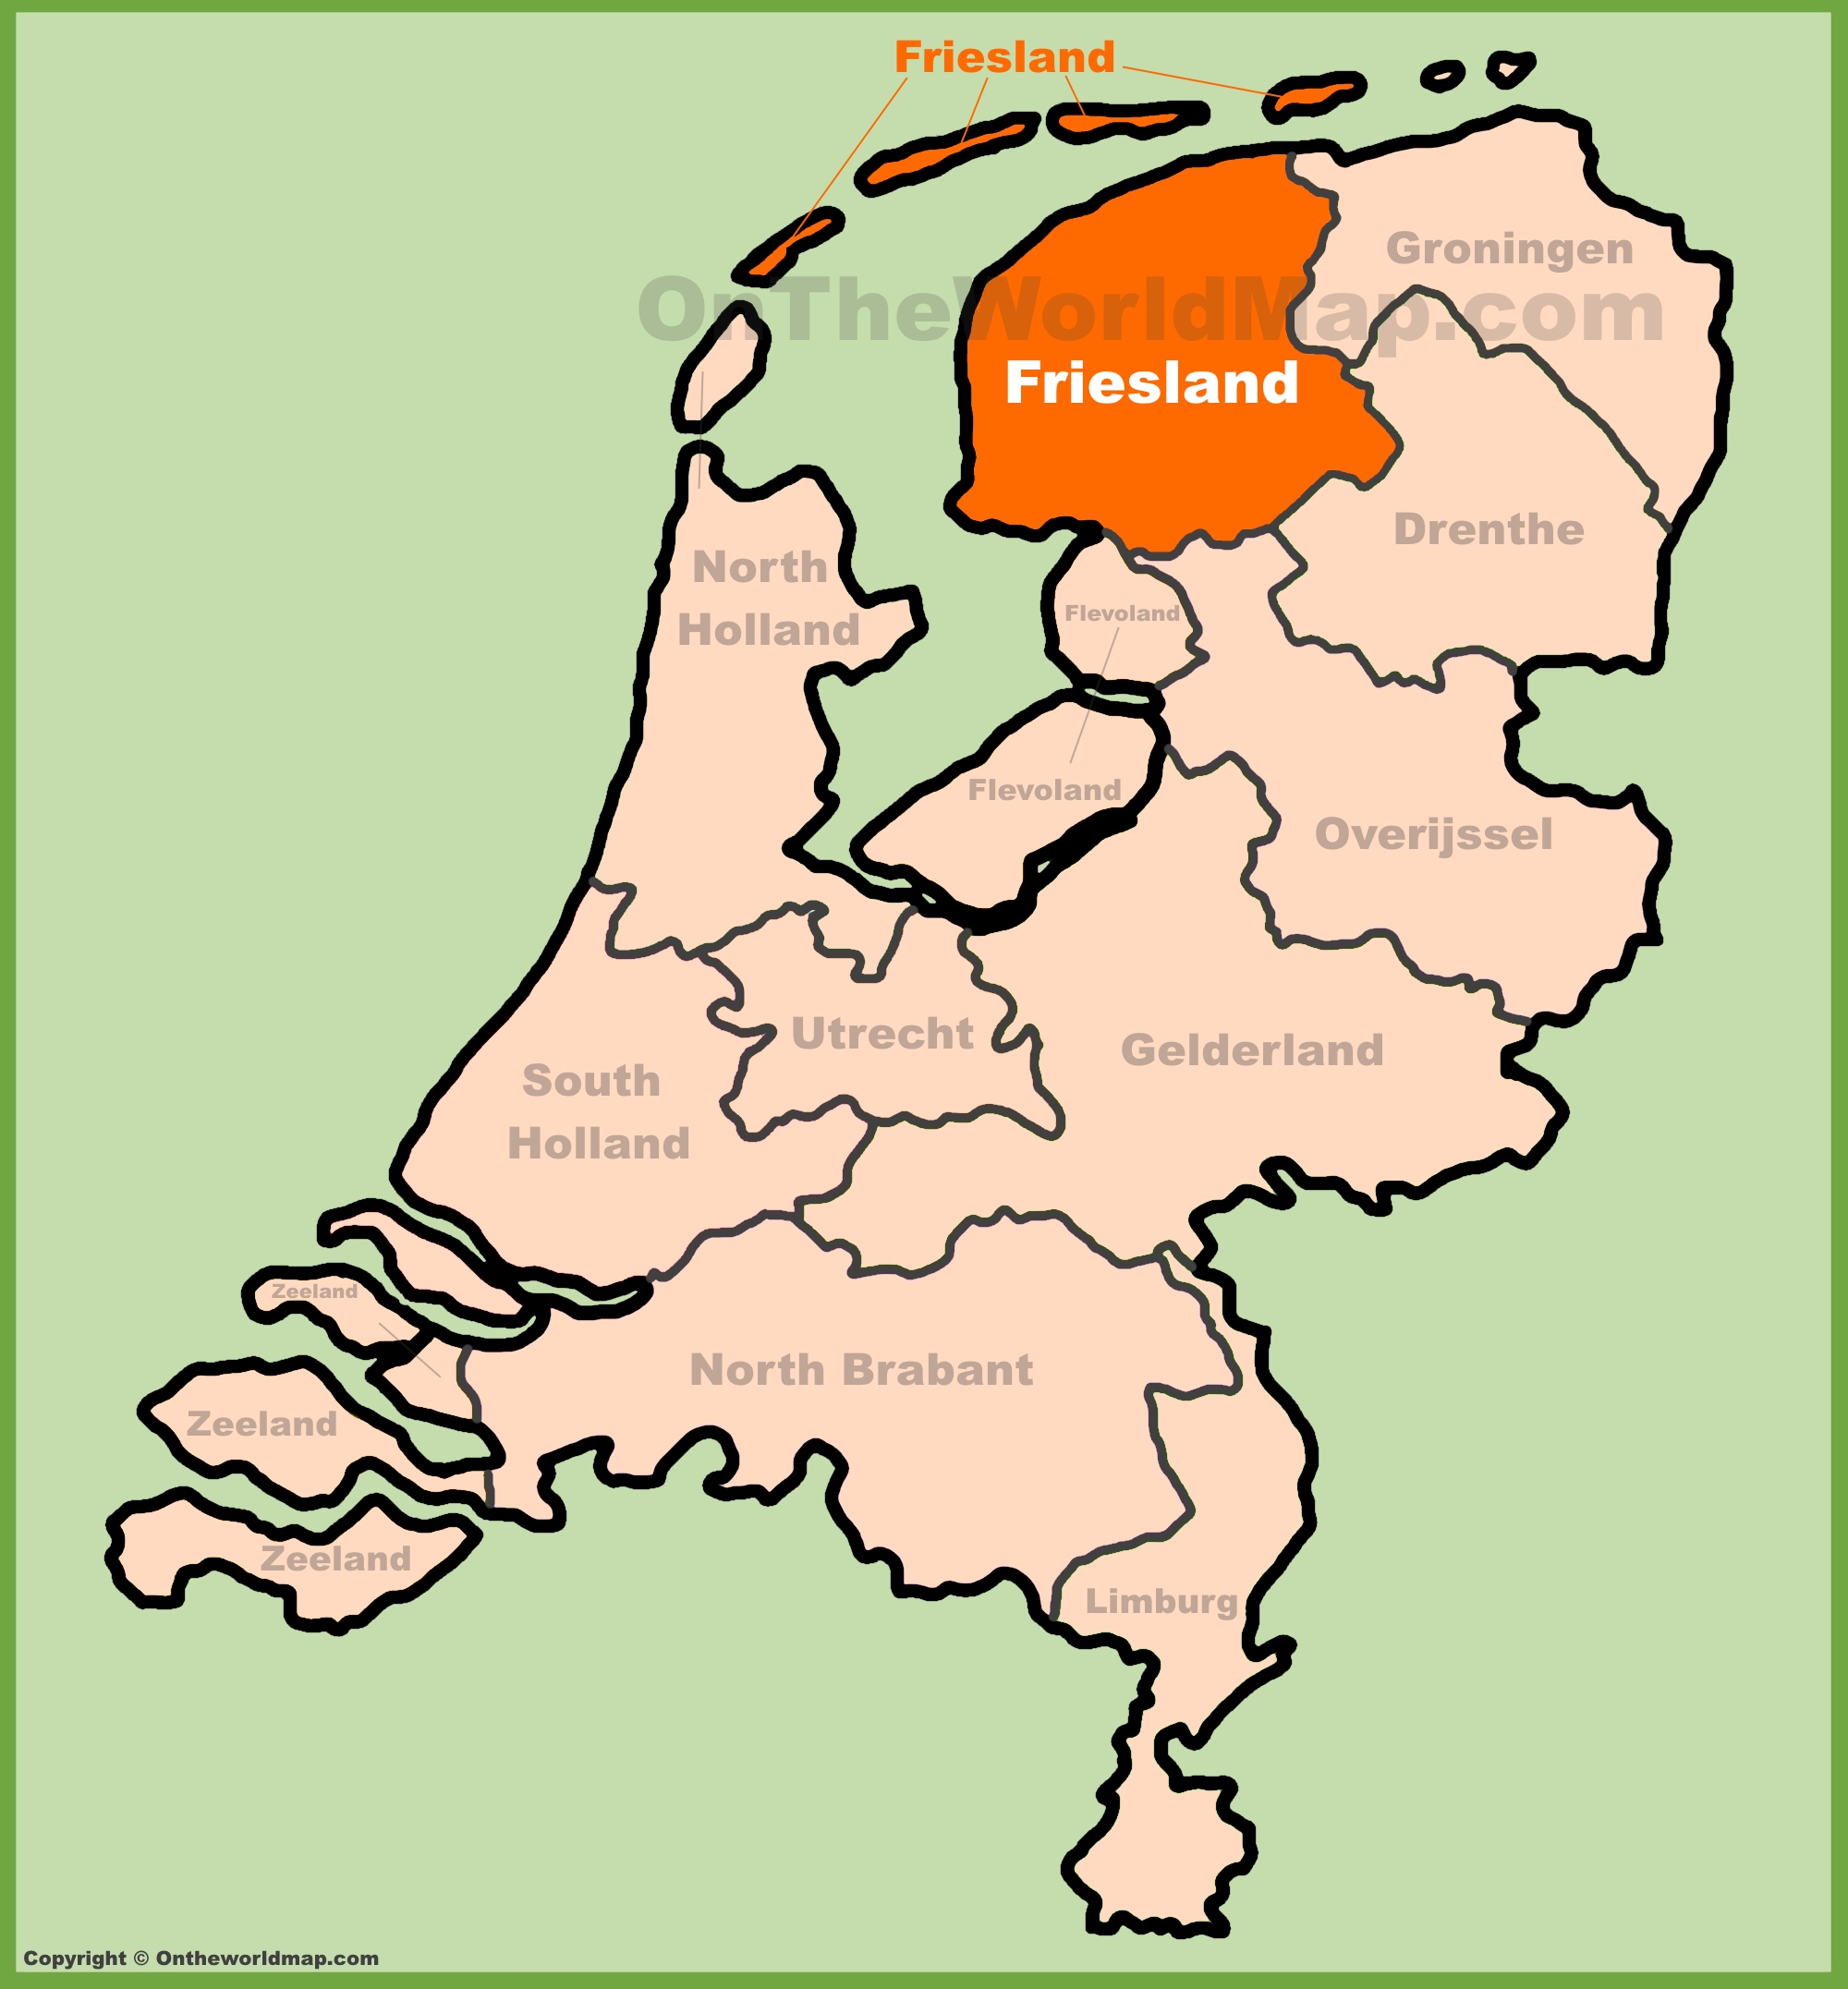 friesland-location-on-the-netherlands-map.jpg